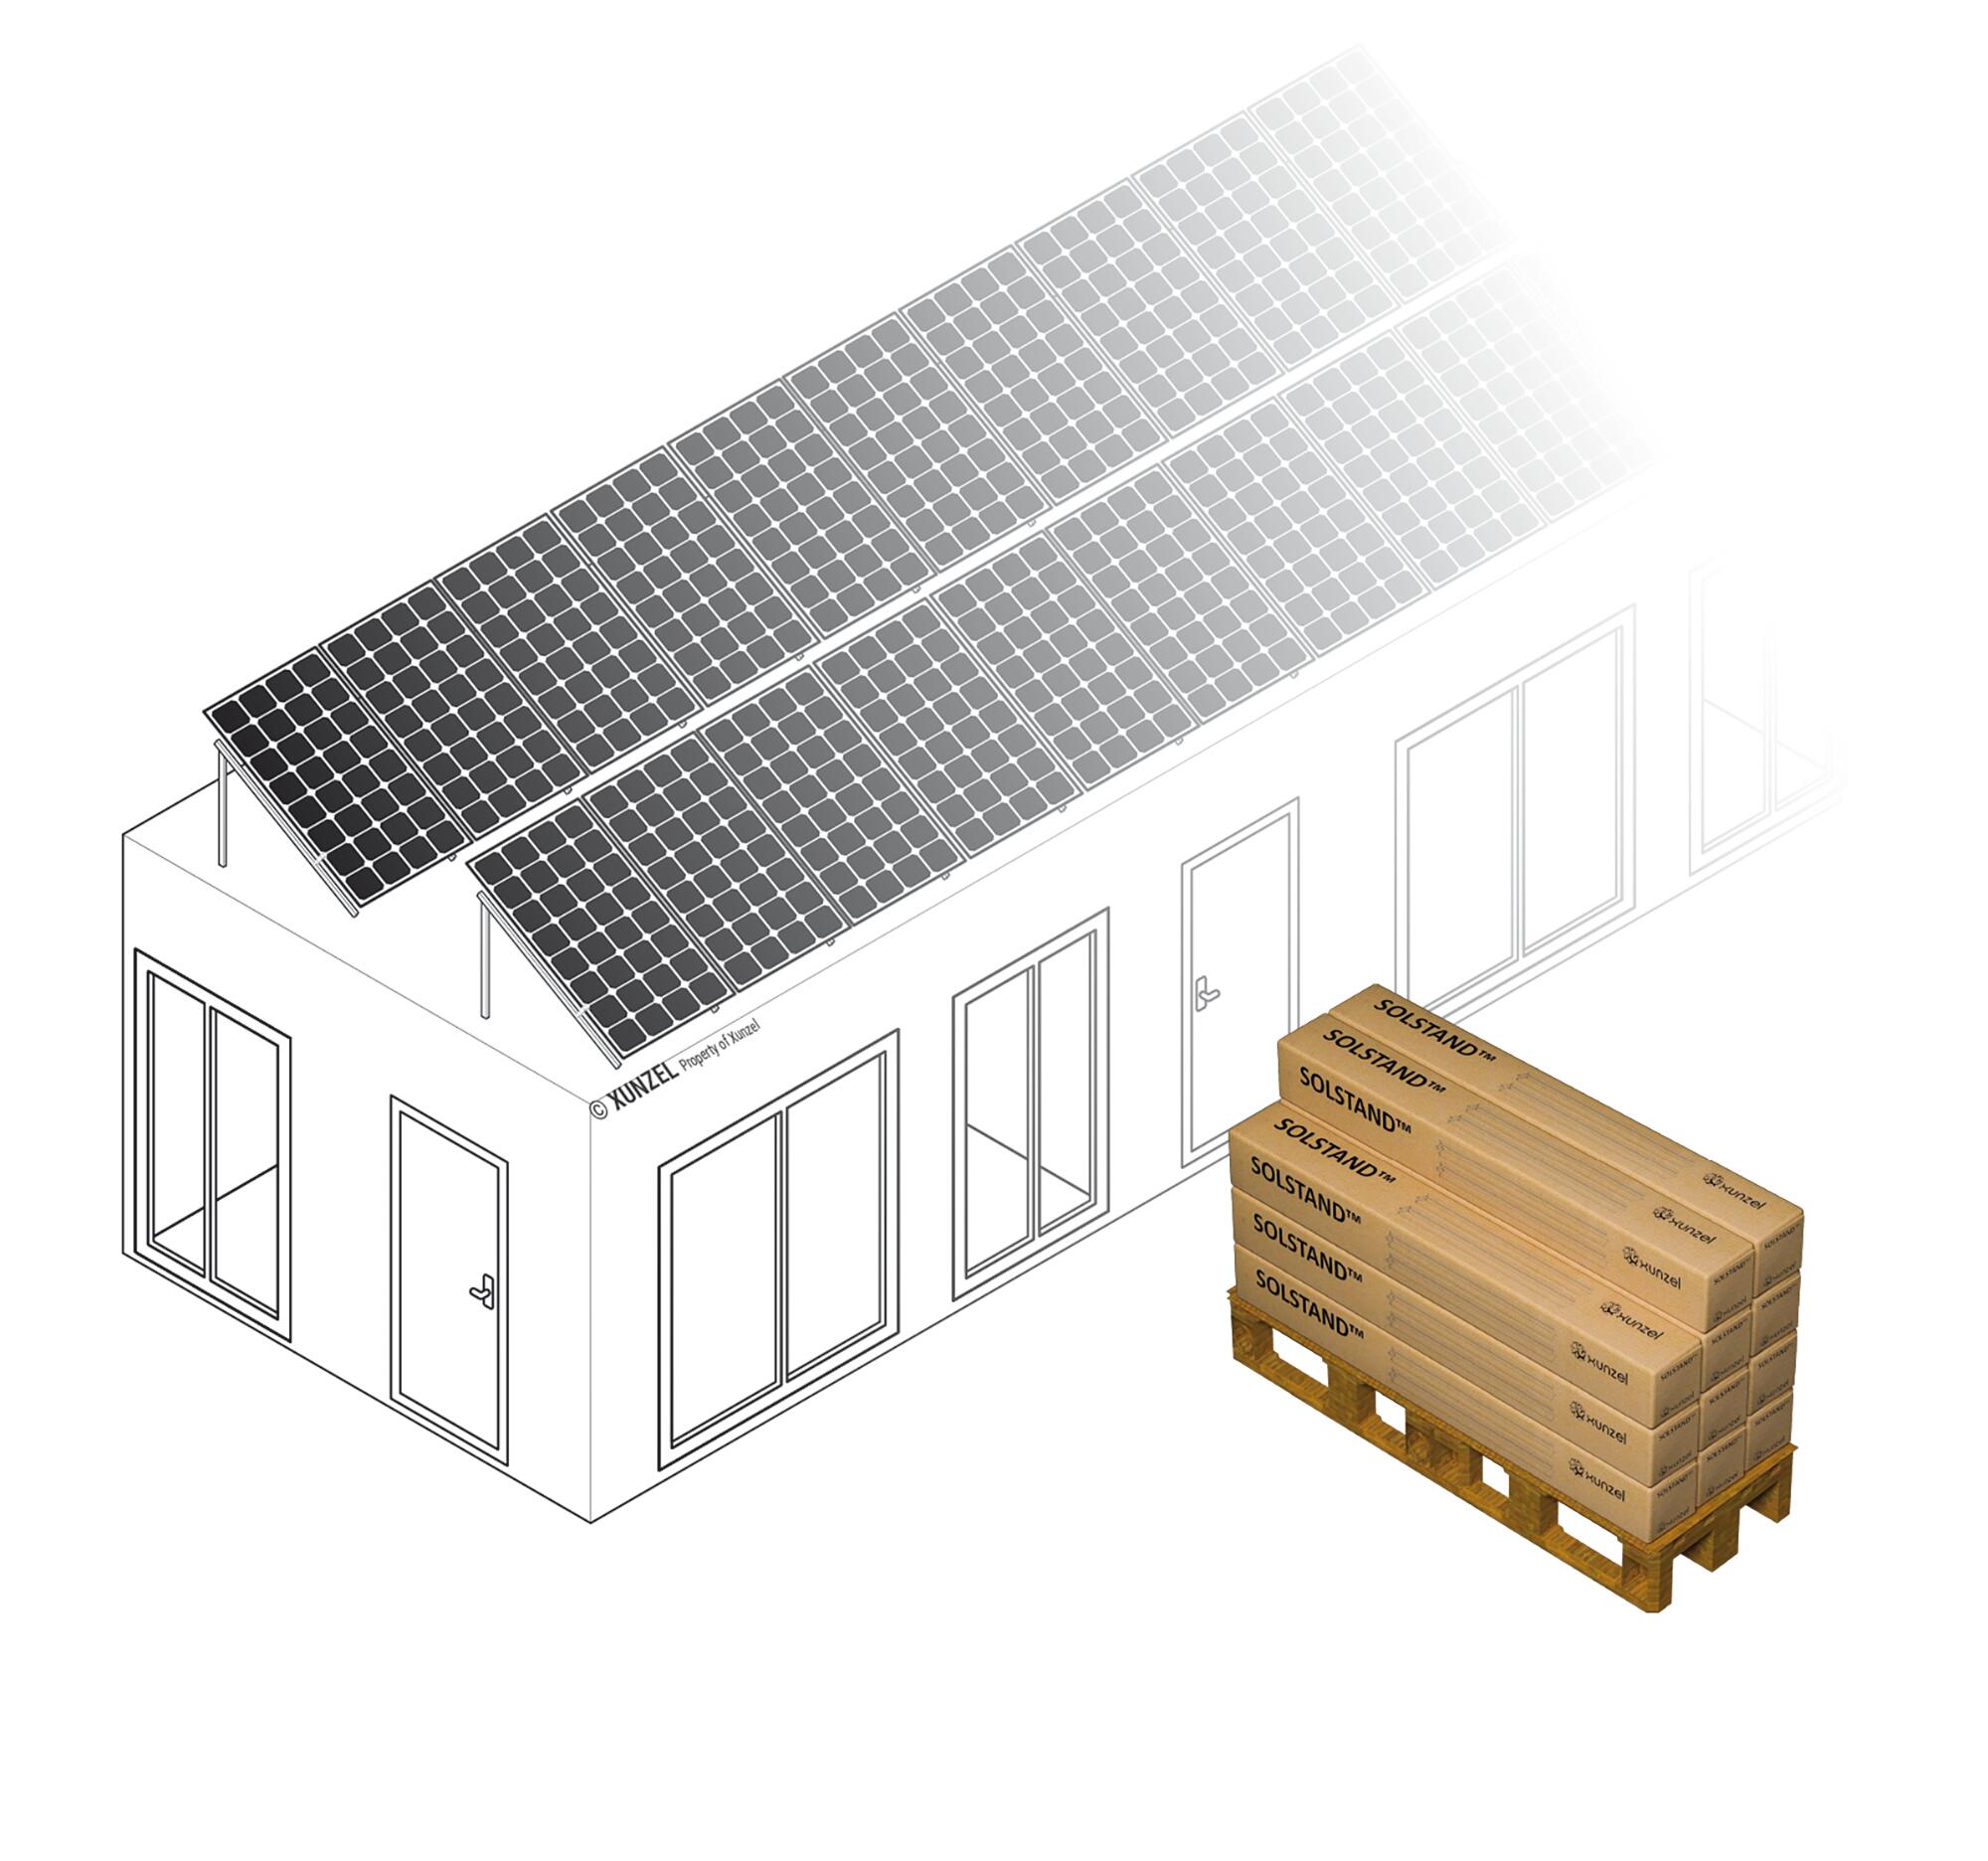 Soporte suelo/cubierta plana solstand-36g-xxl para 36 paneles solarpower-425w